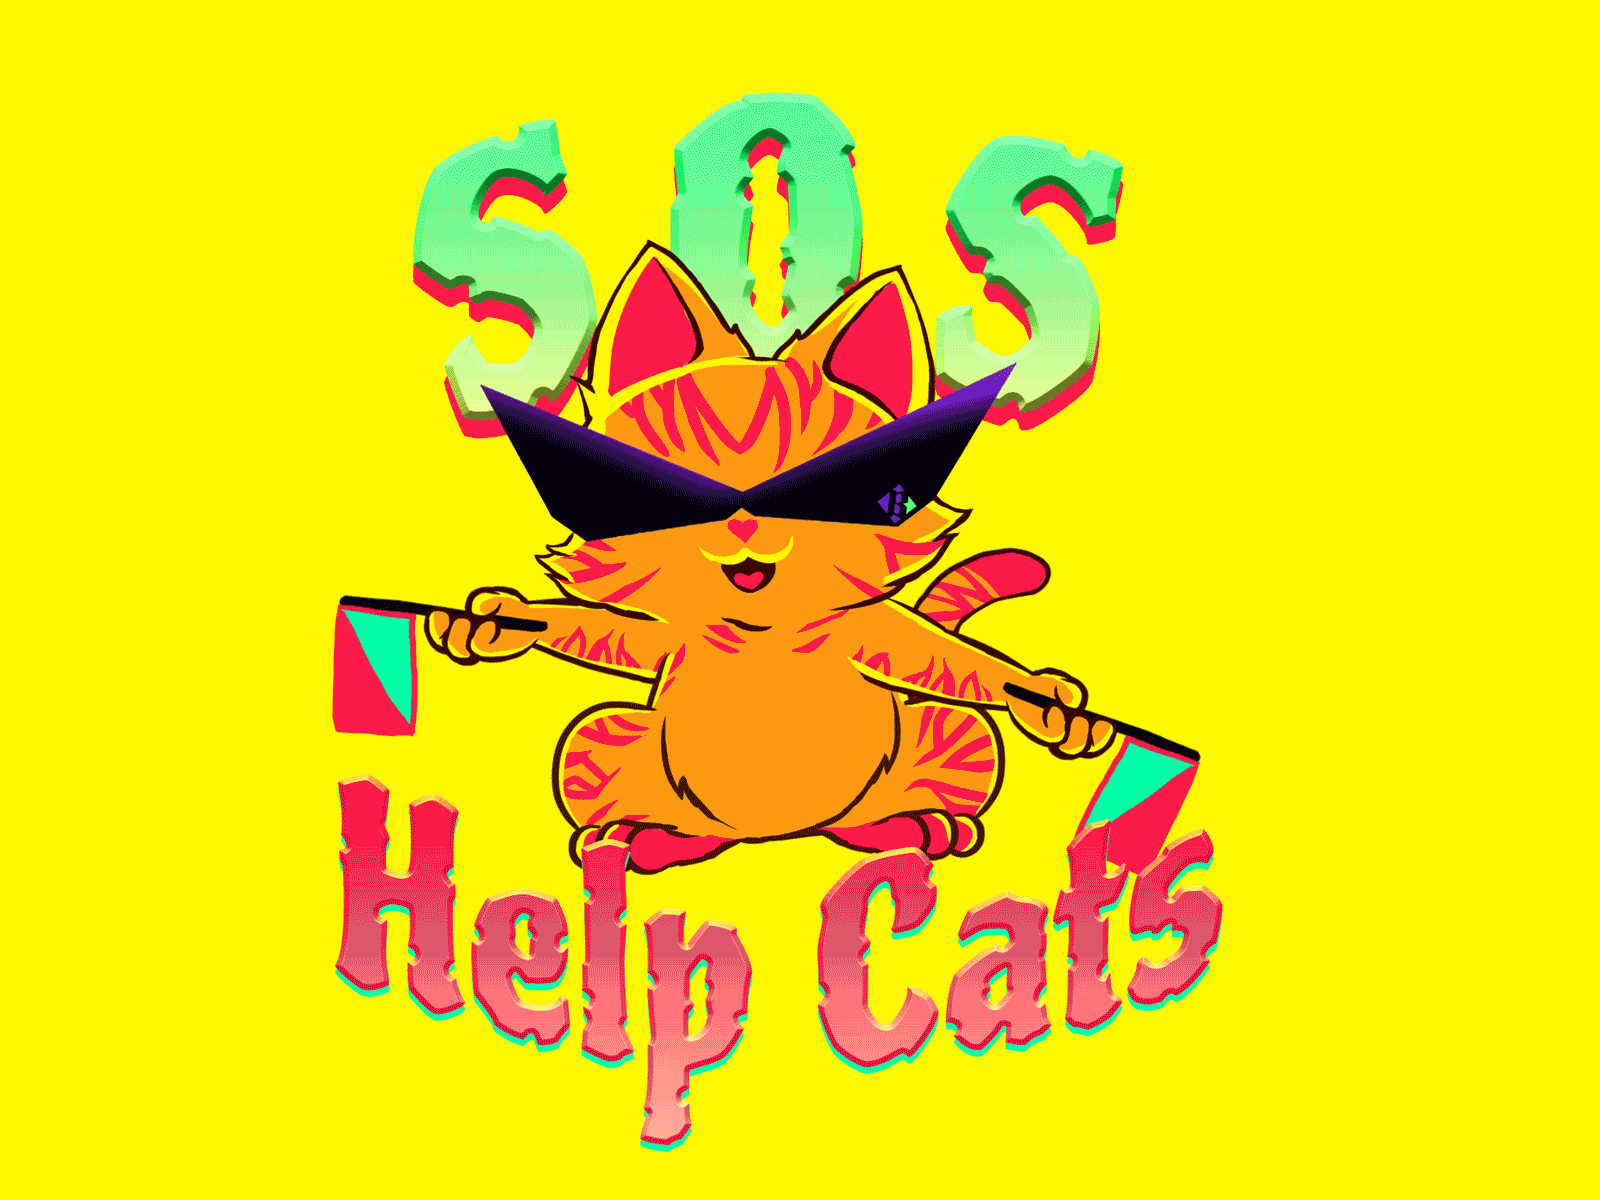 HELP CAT